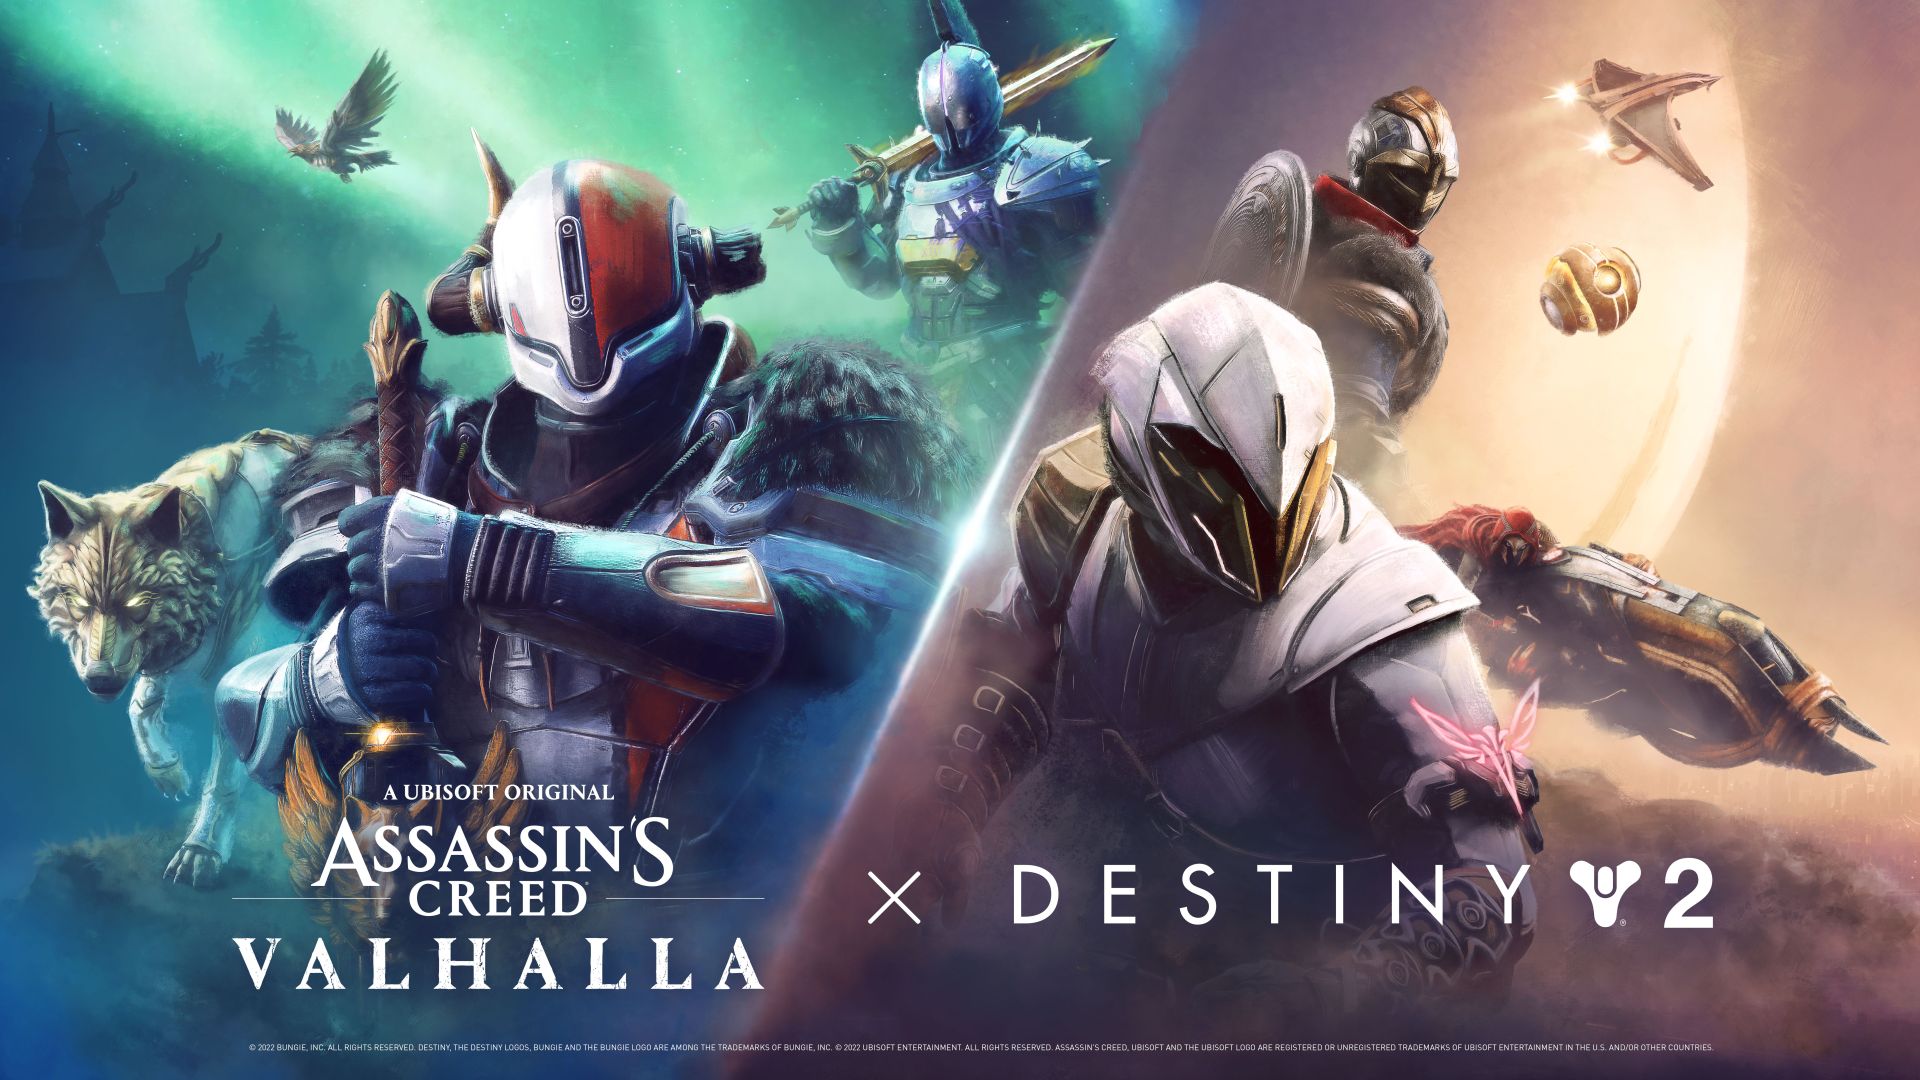 Assassin's Creed Valhalla / Destiny 2 hero image